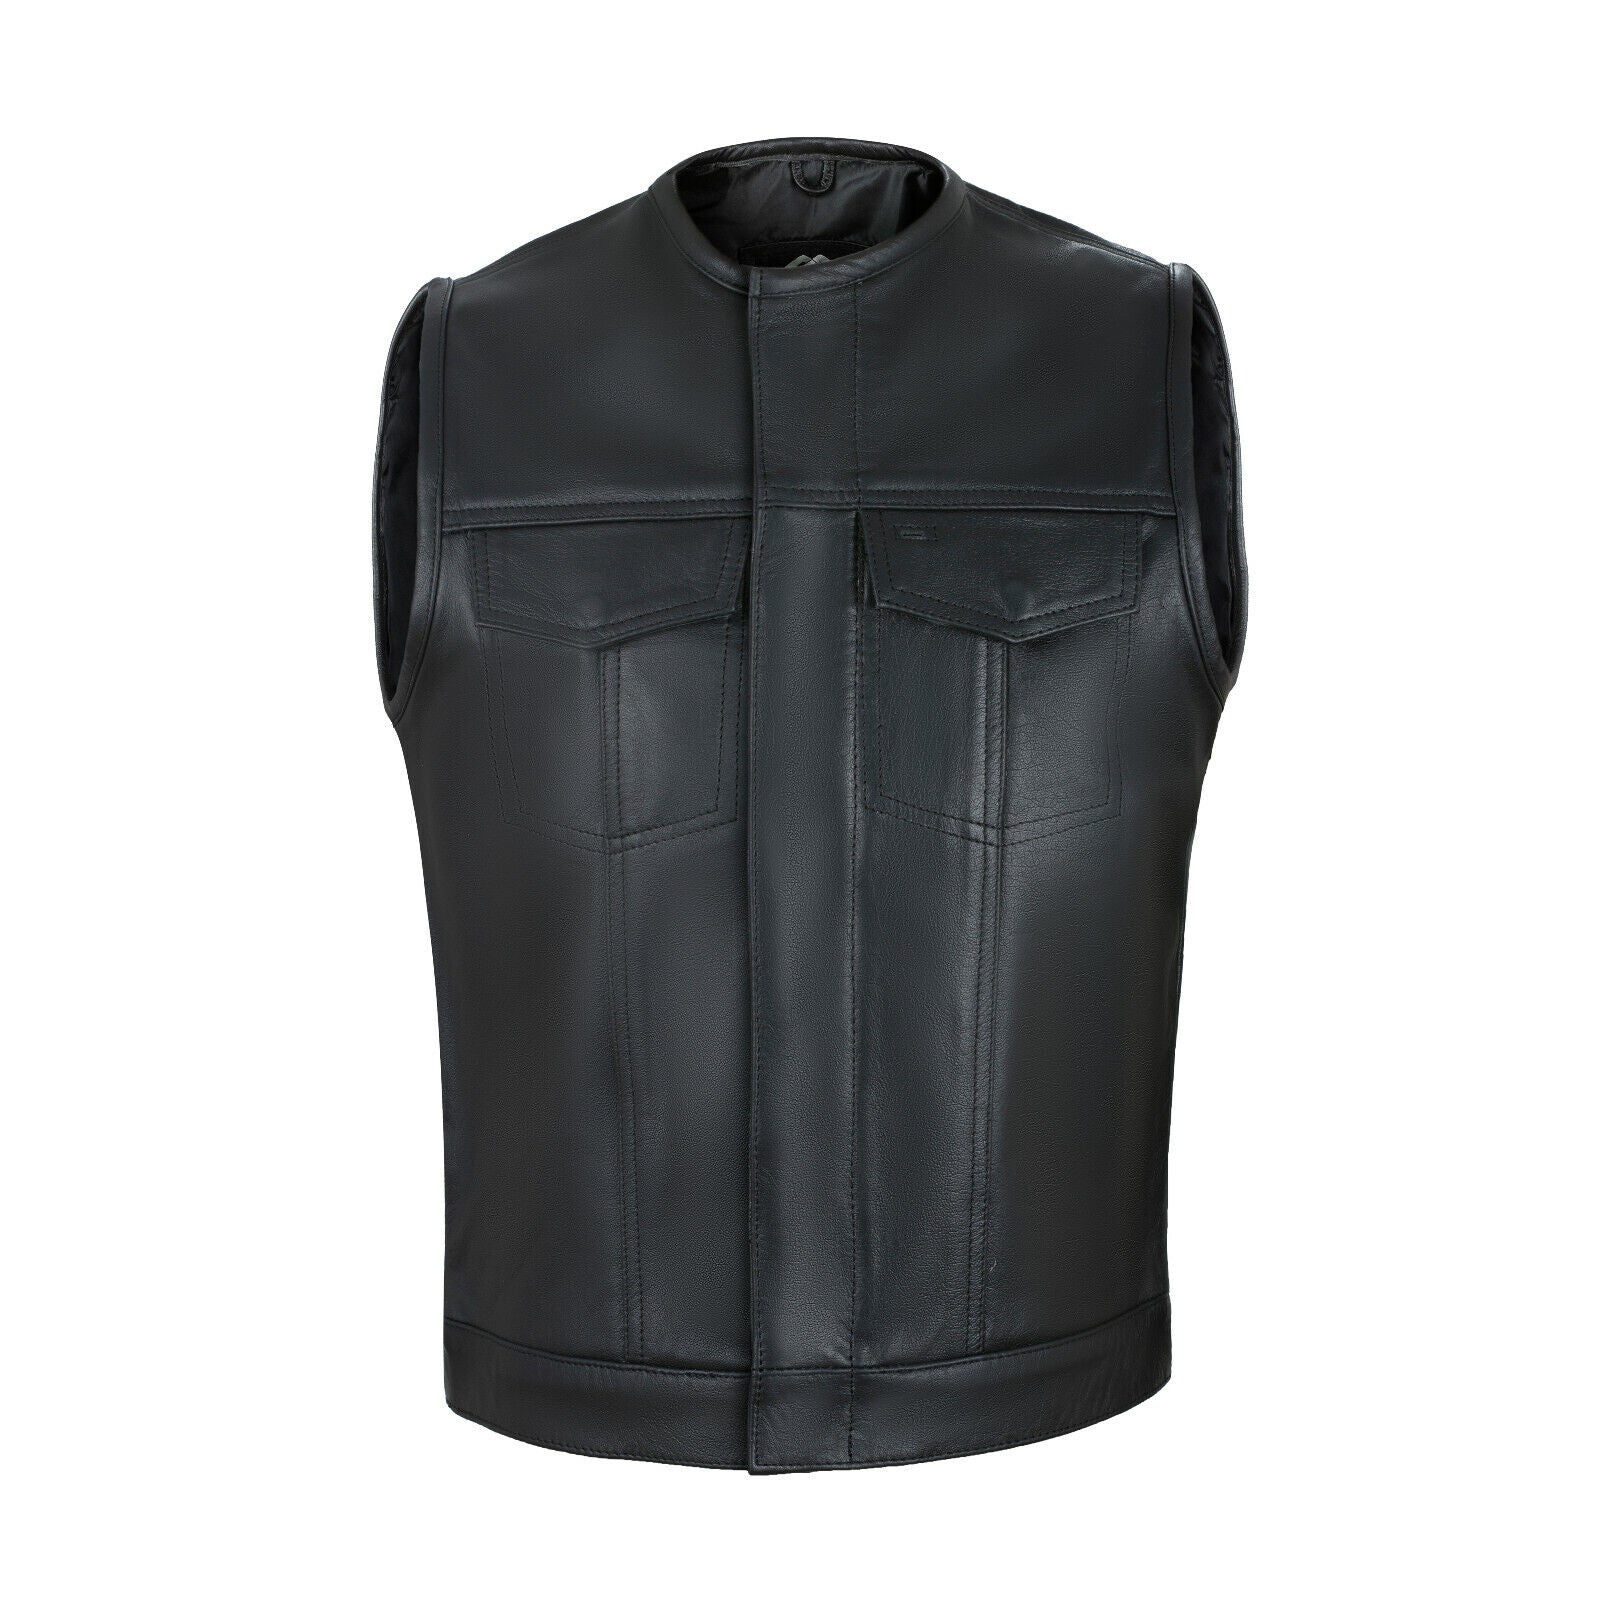 Collarless Cut off Black Mens Vest Waistcoat Gilet Biker Motorcycle Leather YKK